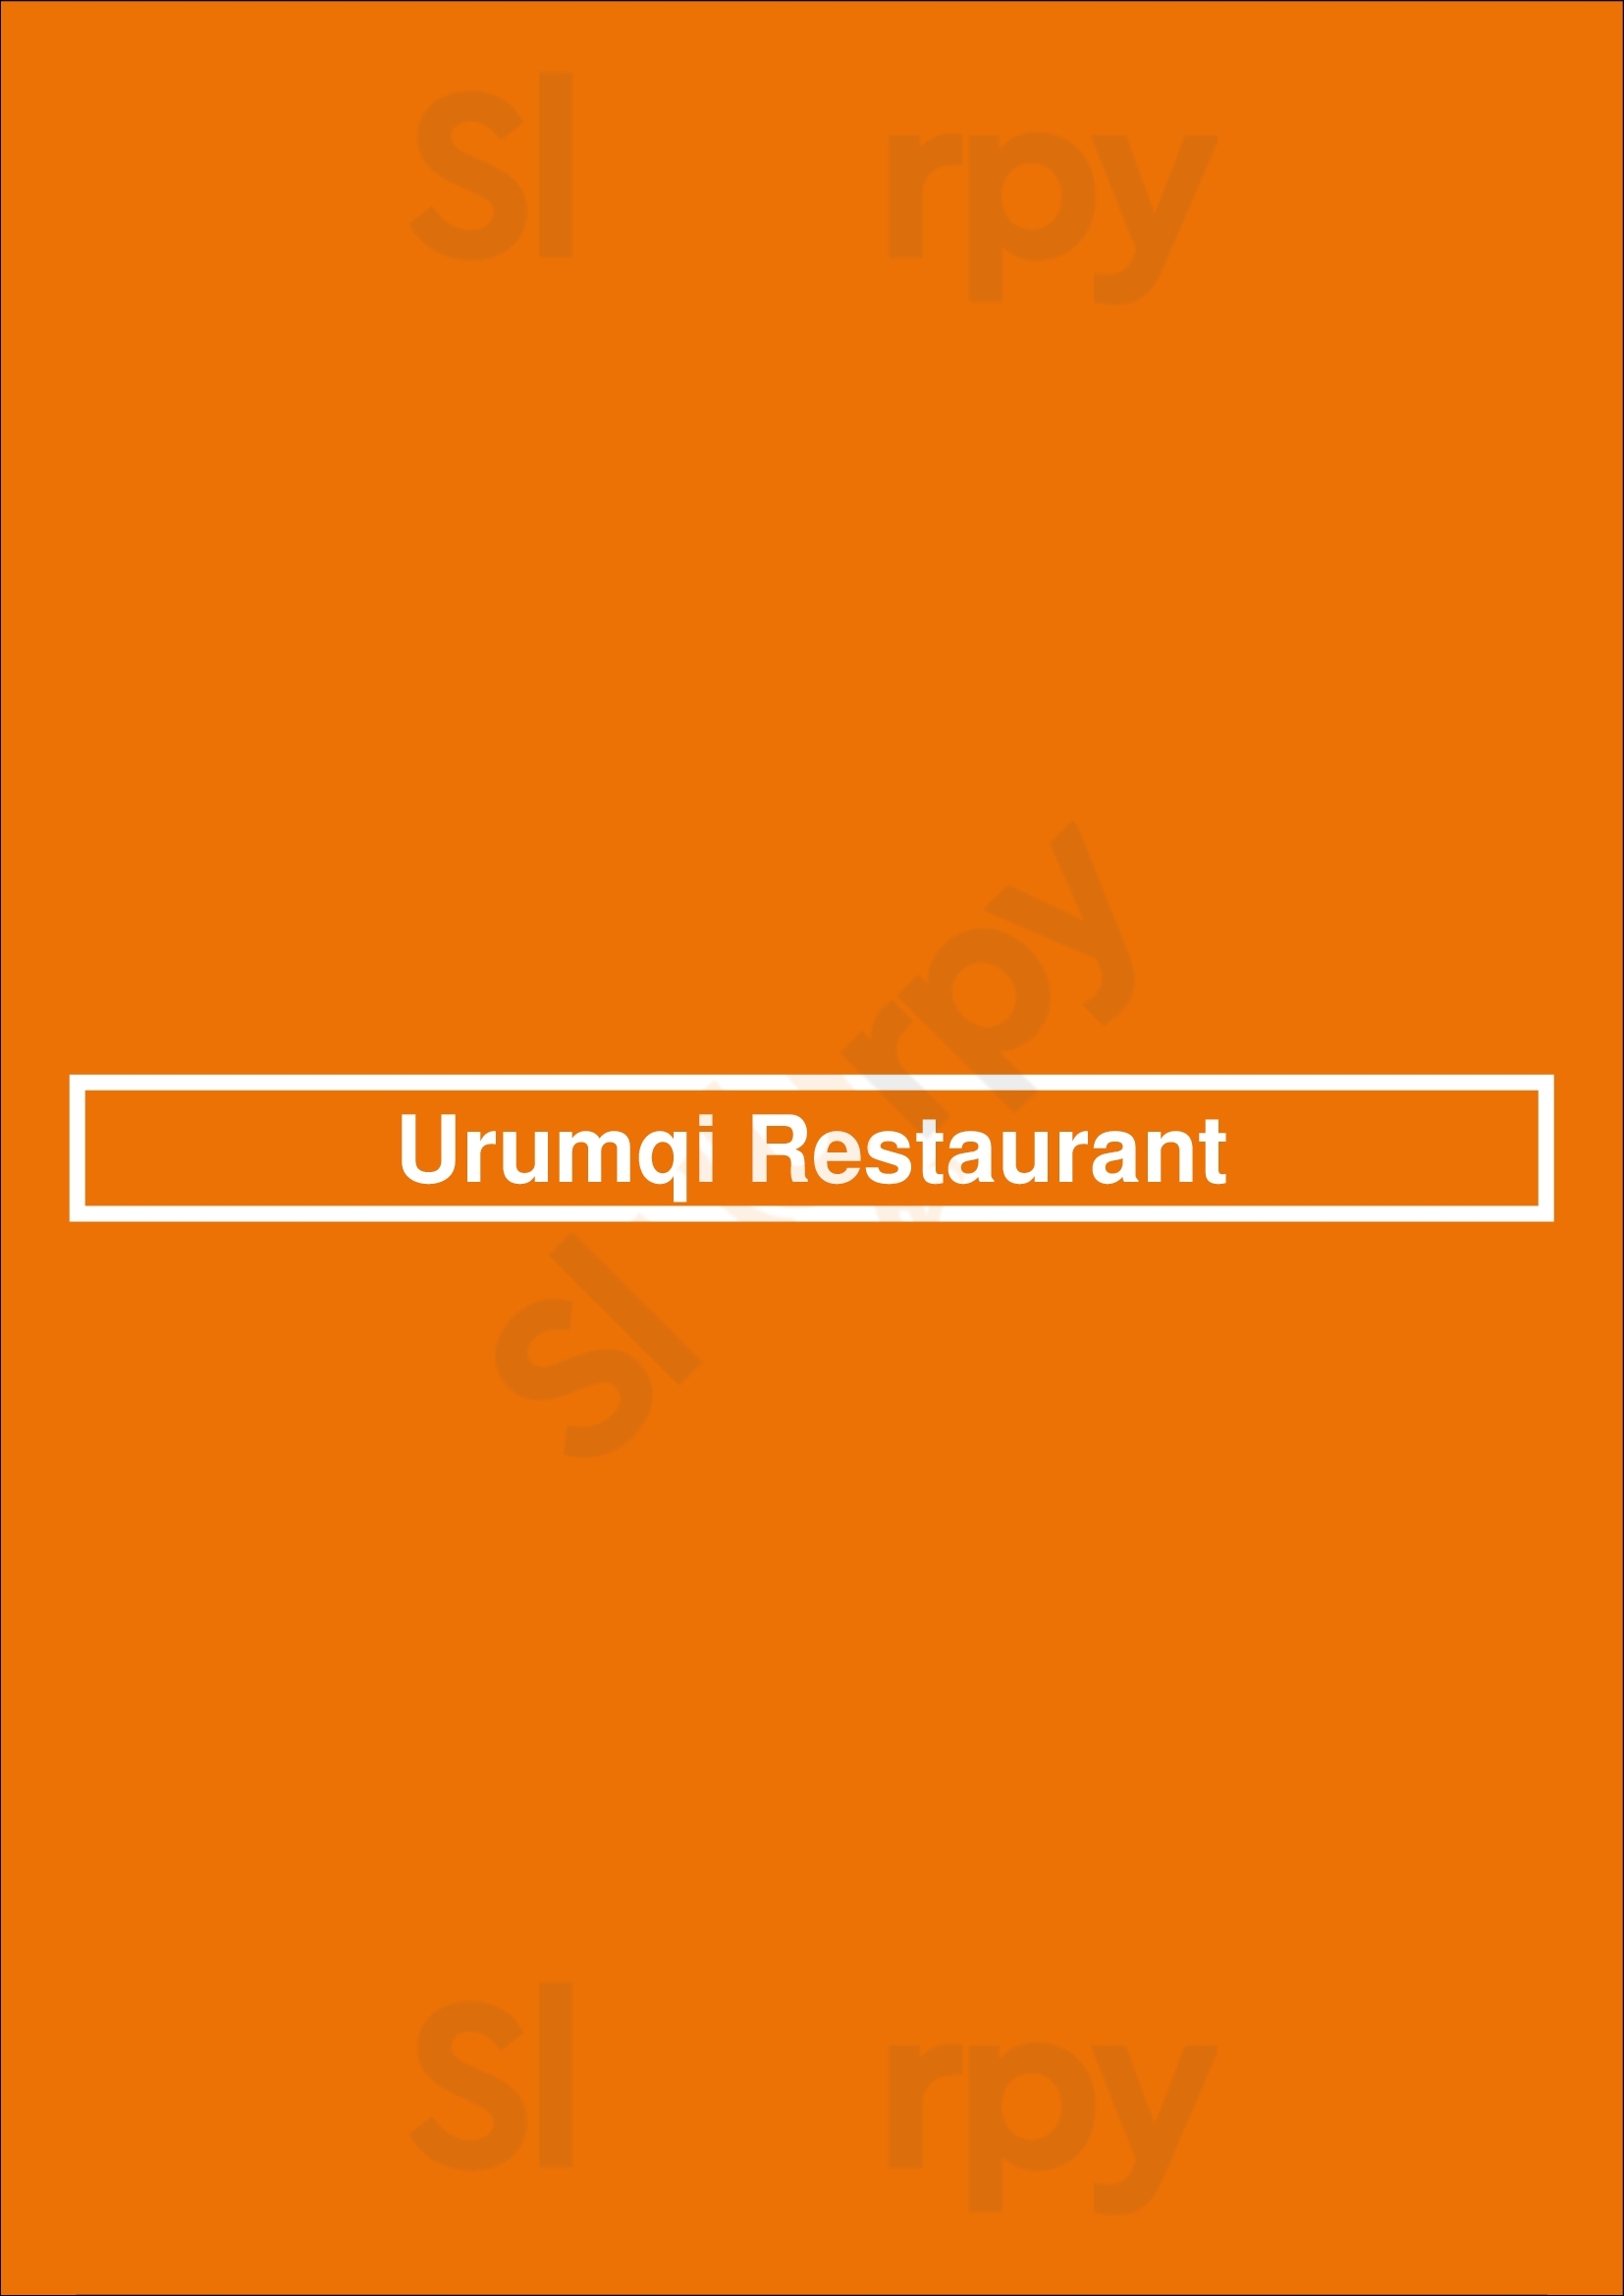 Urumqi Restaurant Rotterdam Menu - 1